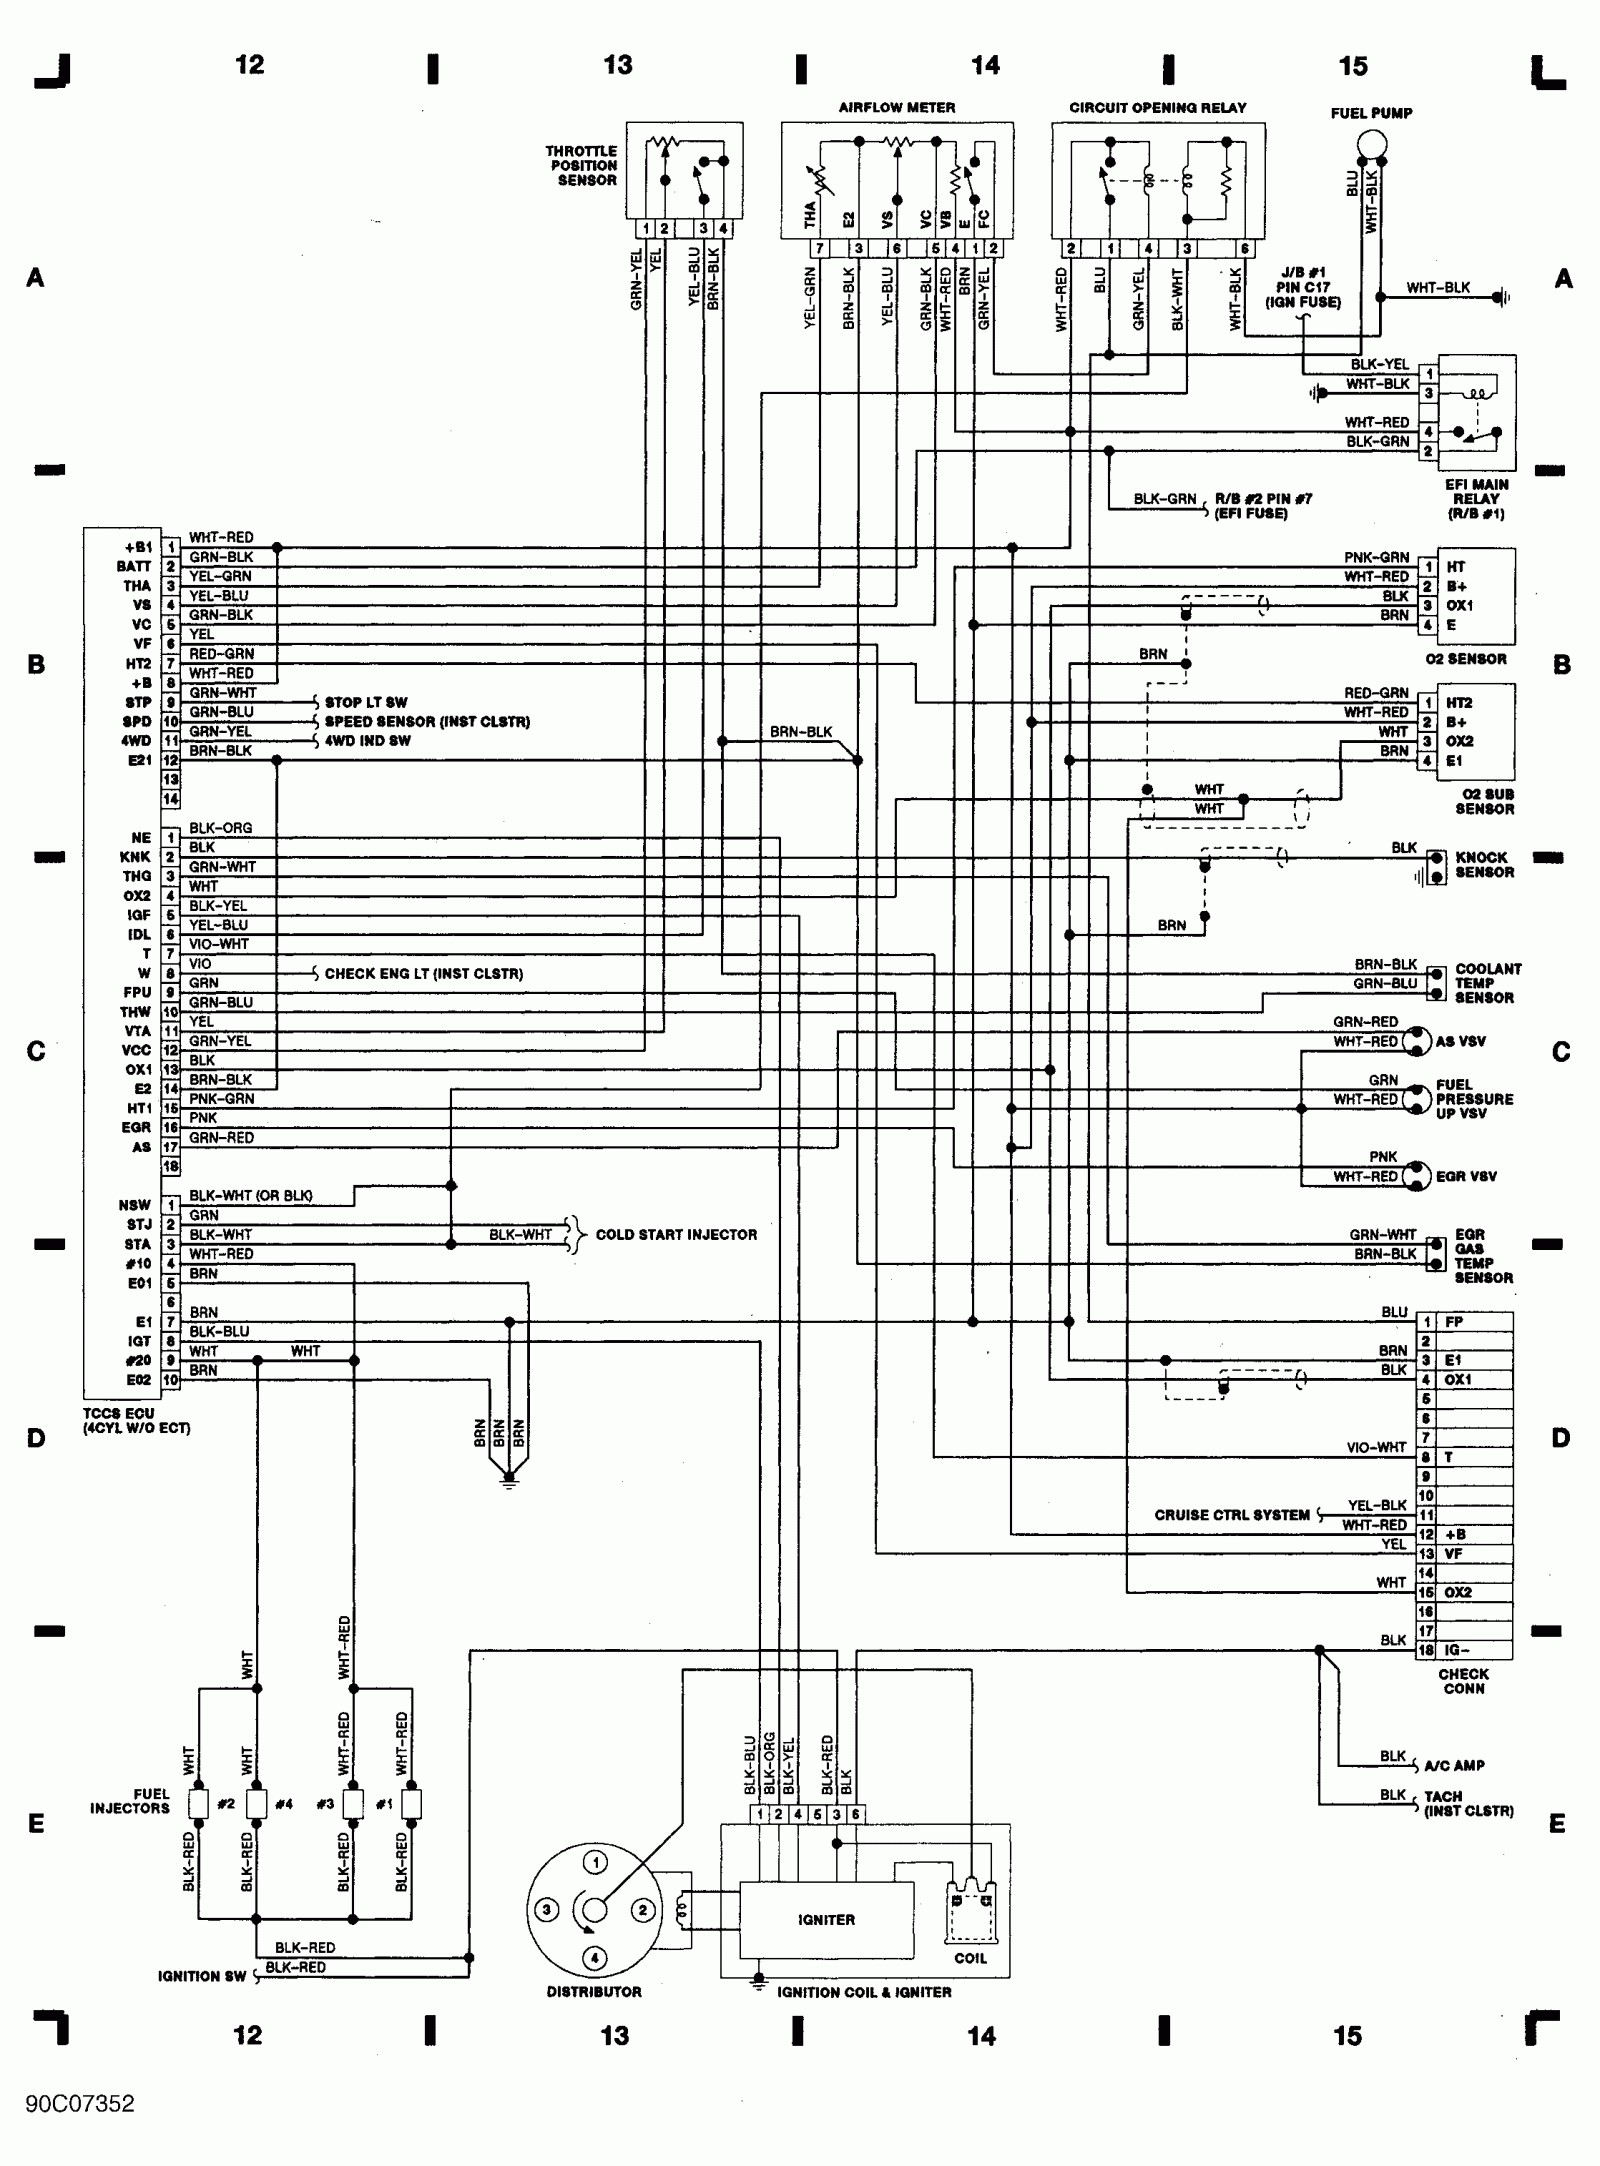 2003 Toyota Corolla Wiring Diagram from detoxicrecenze.com